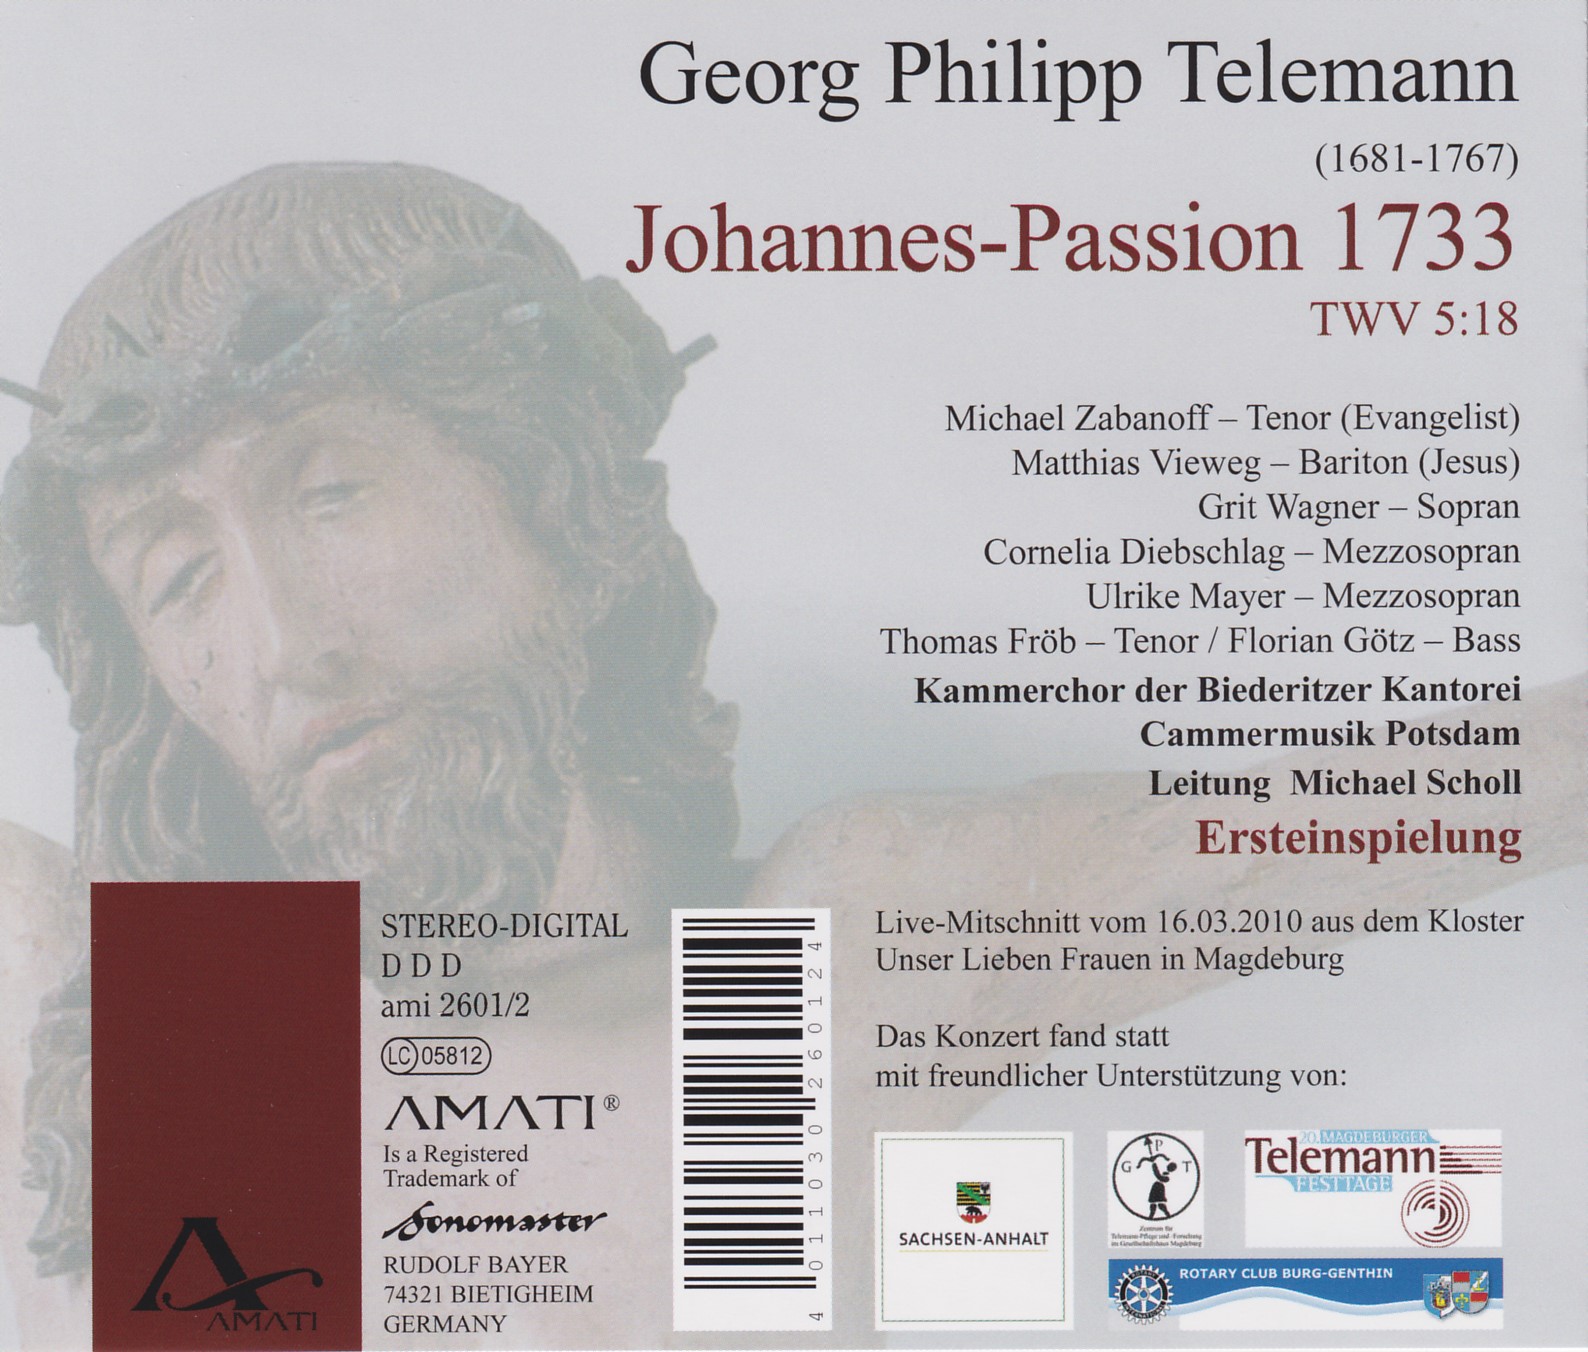 Georg Philipp Telemann - Johannes-Passion 1733 TWV 5:18